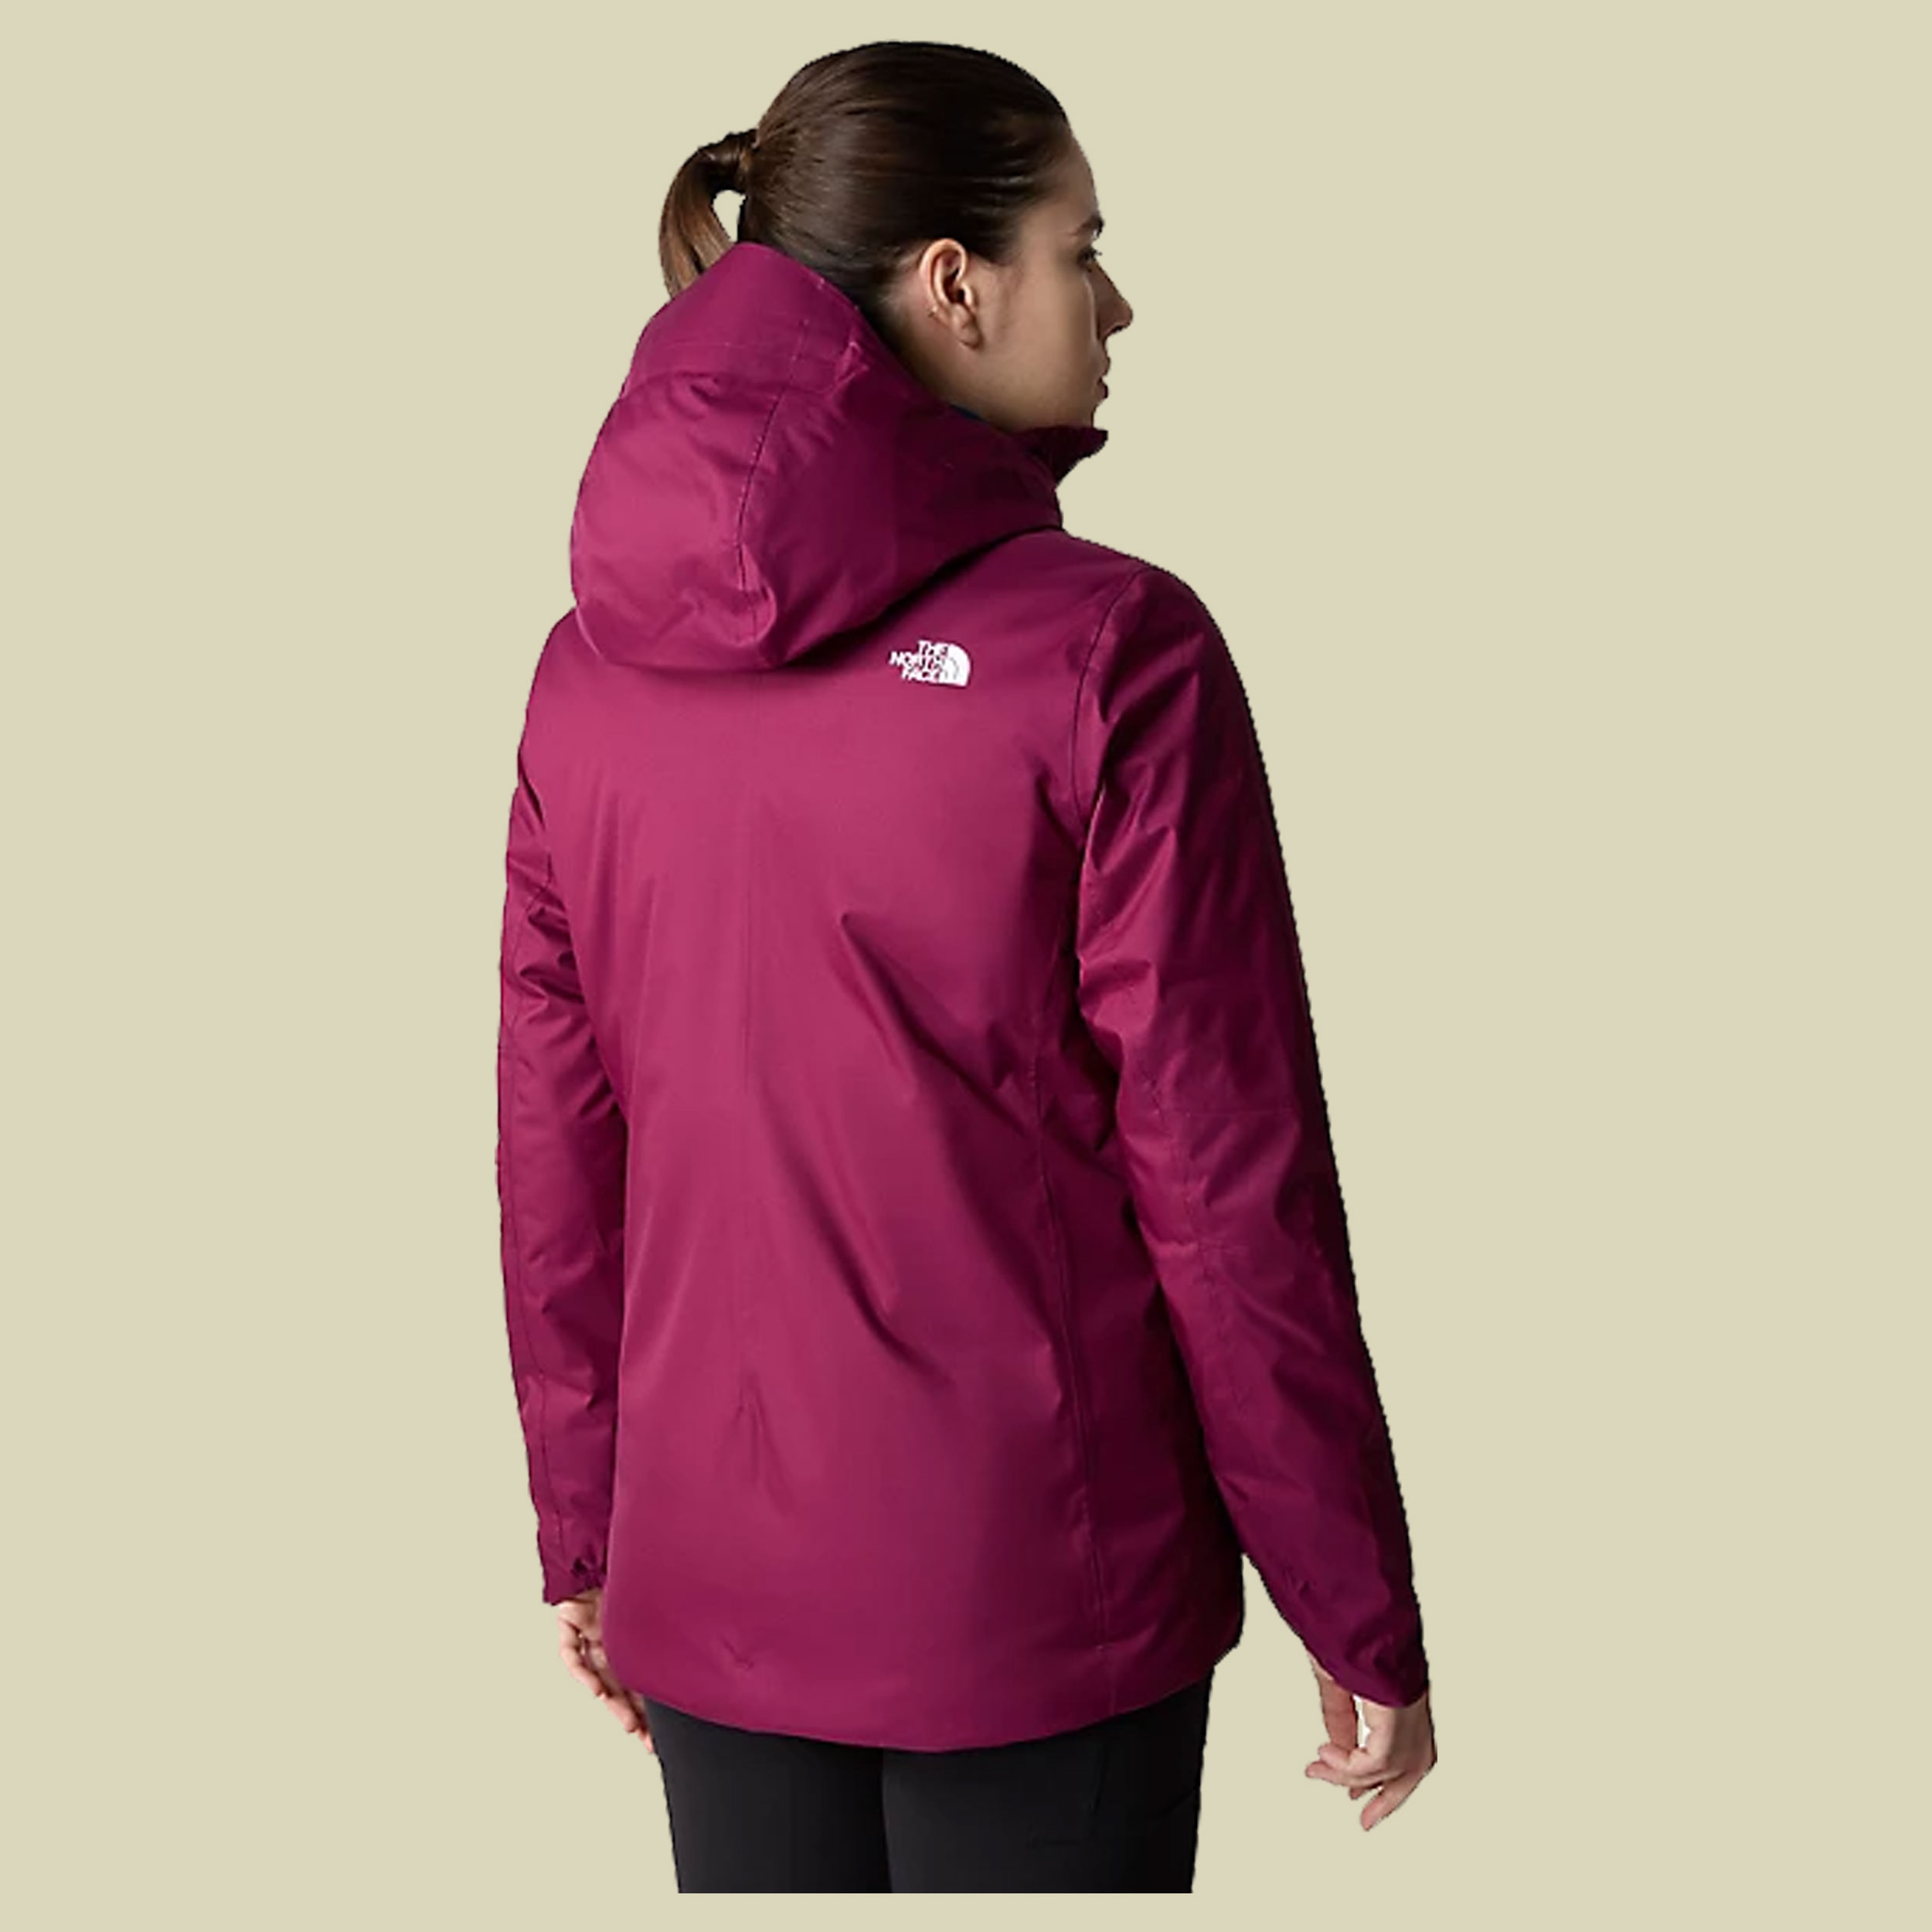 Quest Insulated Jacket Women Größe XS Farbe boysenberry